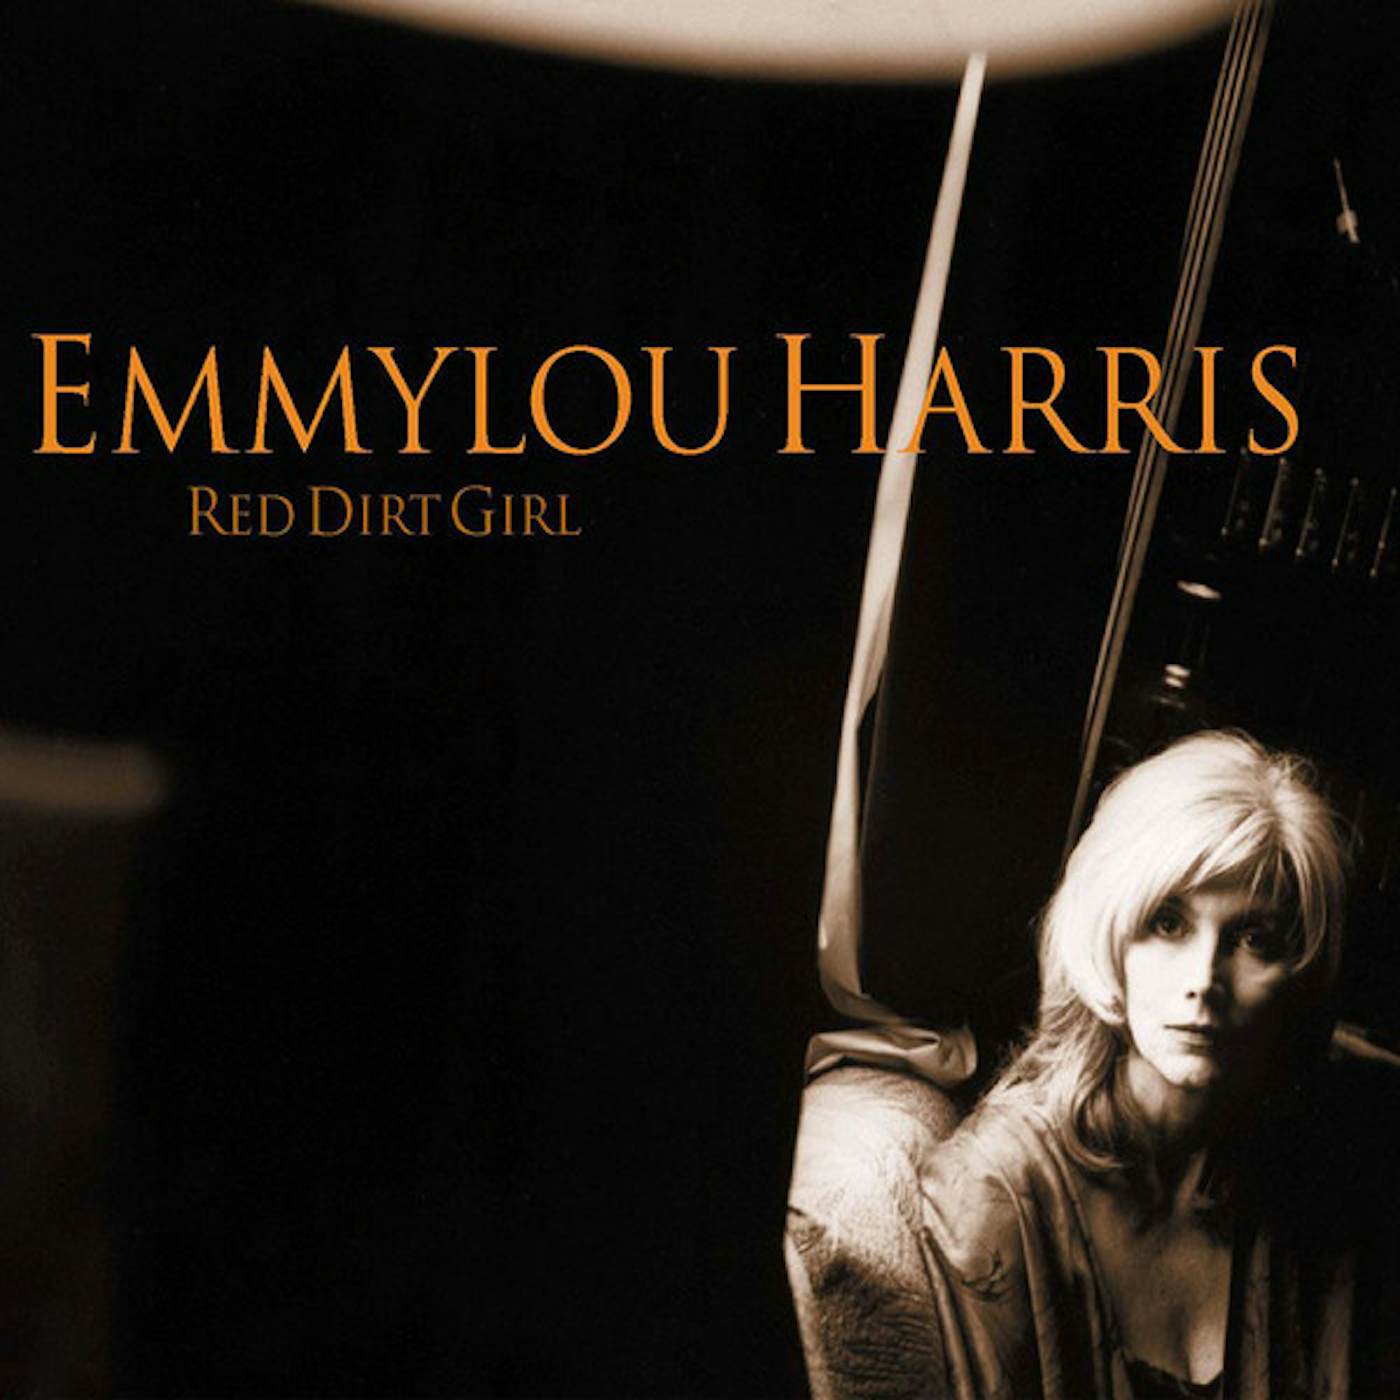 Emmylou Harris Red Dirt Girl Vinyl Record